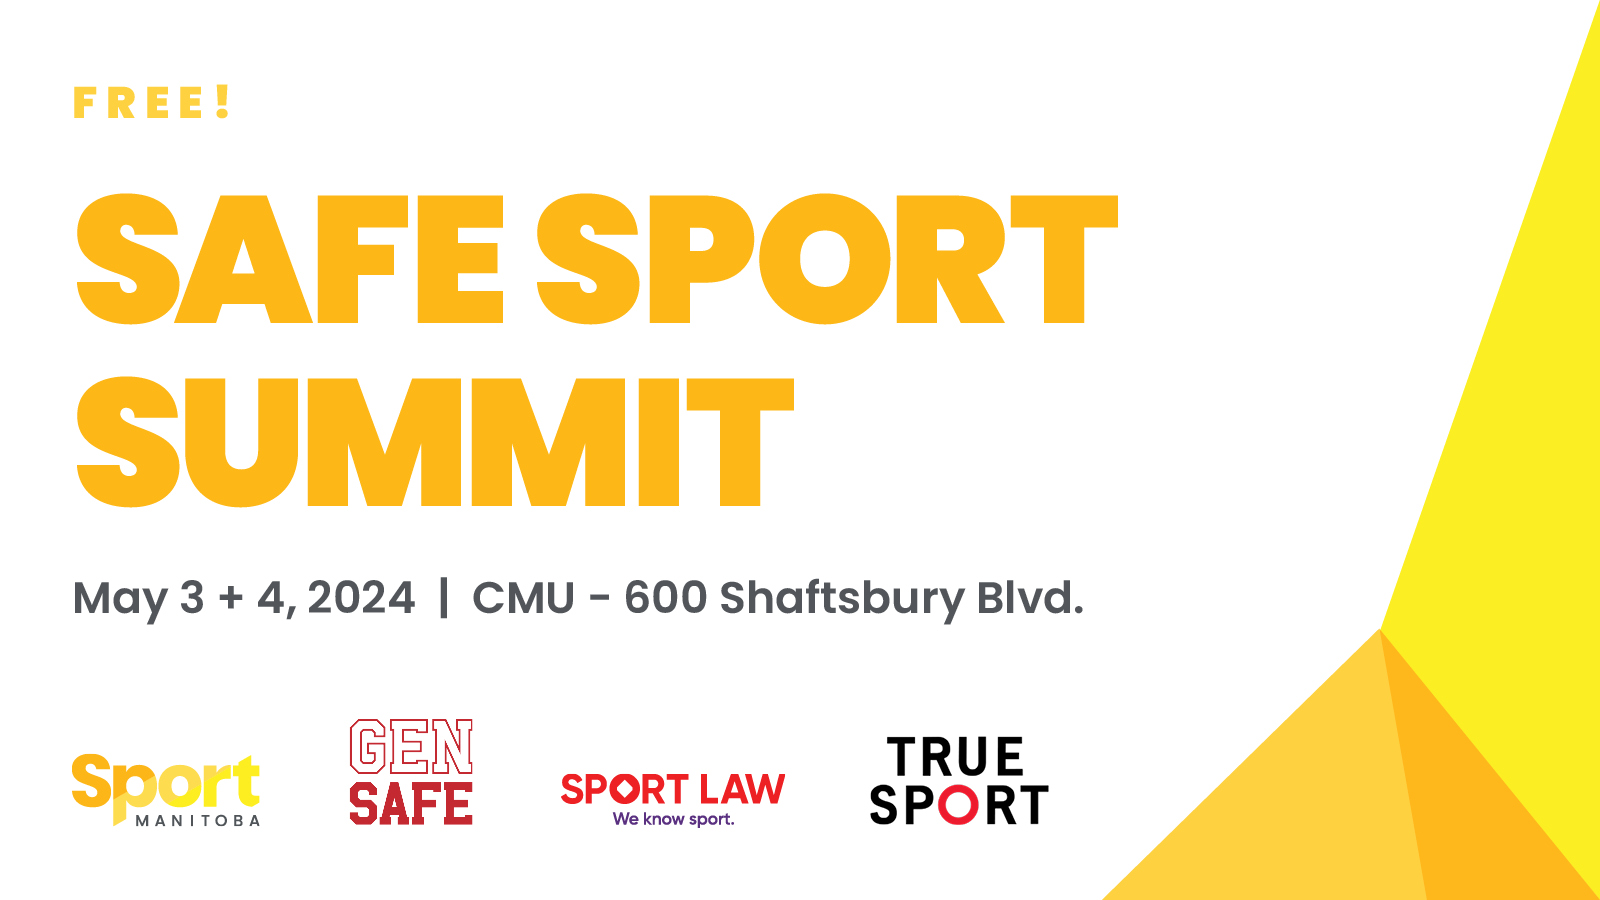 Free! Safe Sport Summit